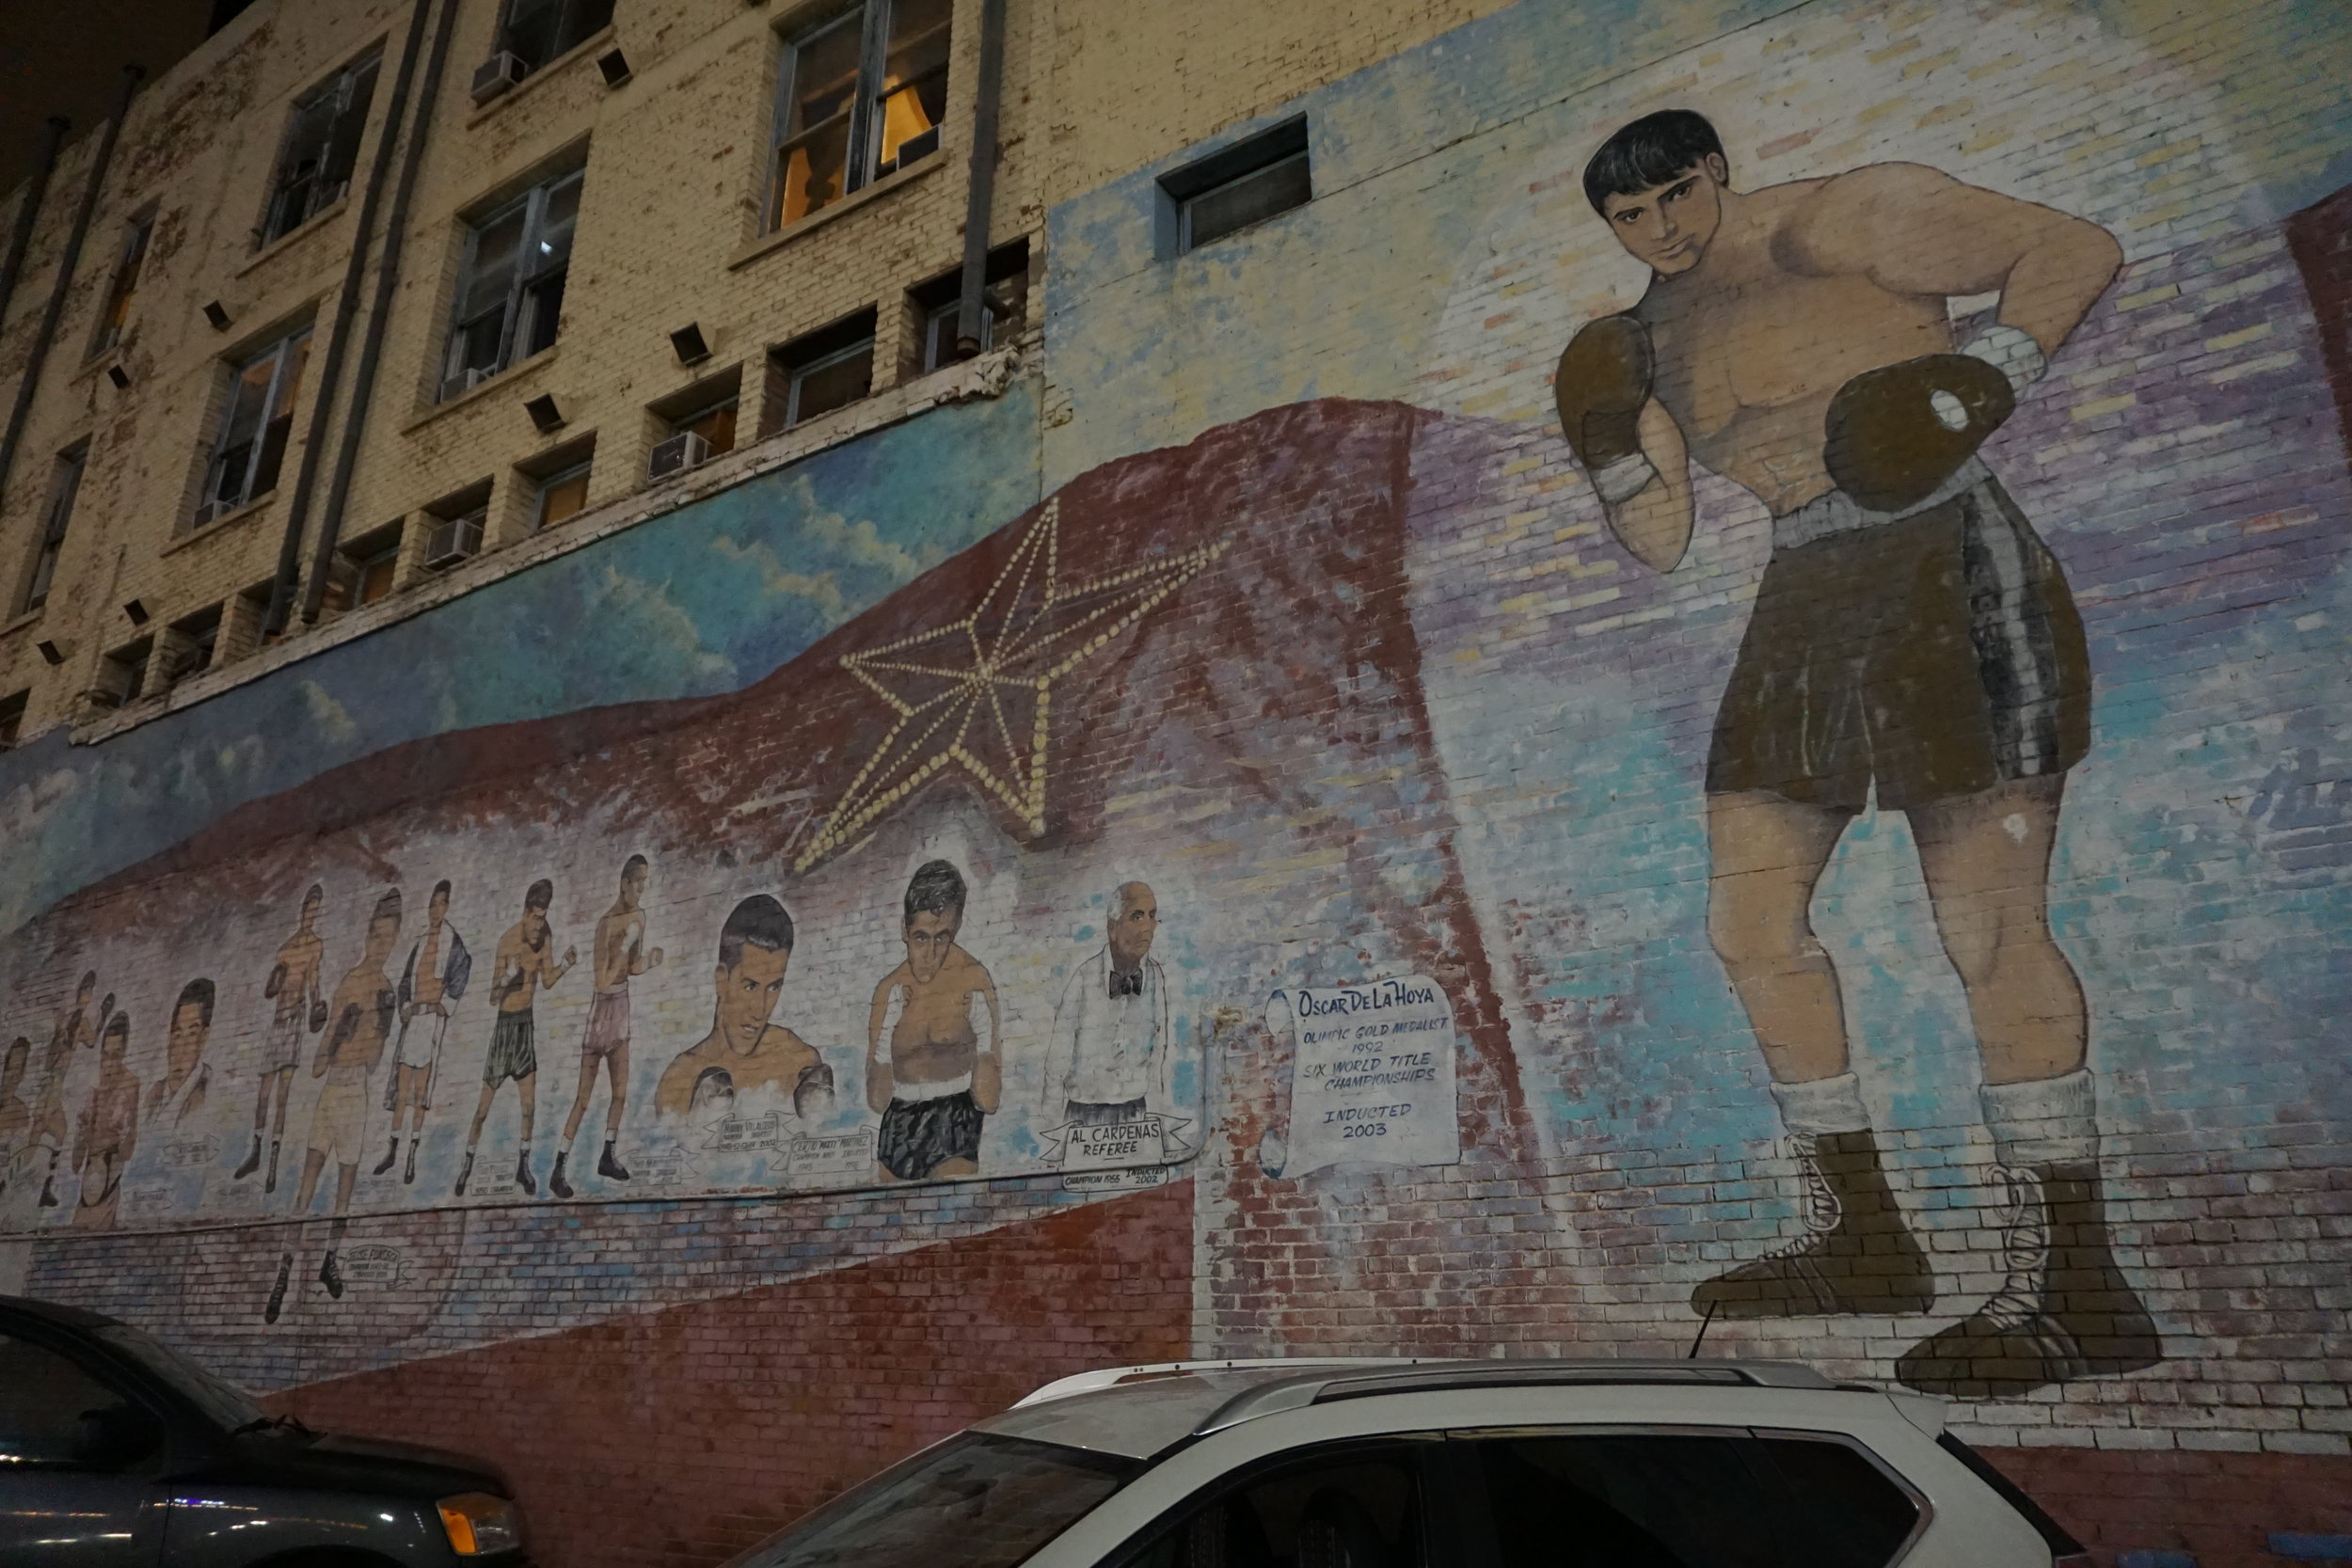 Street art mural showing boxer Oscar de la Hoya